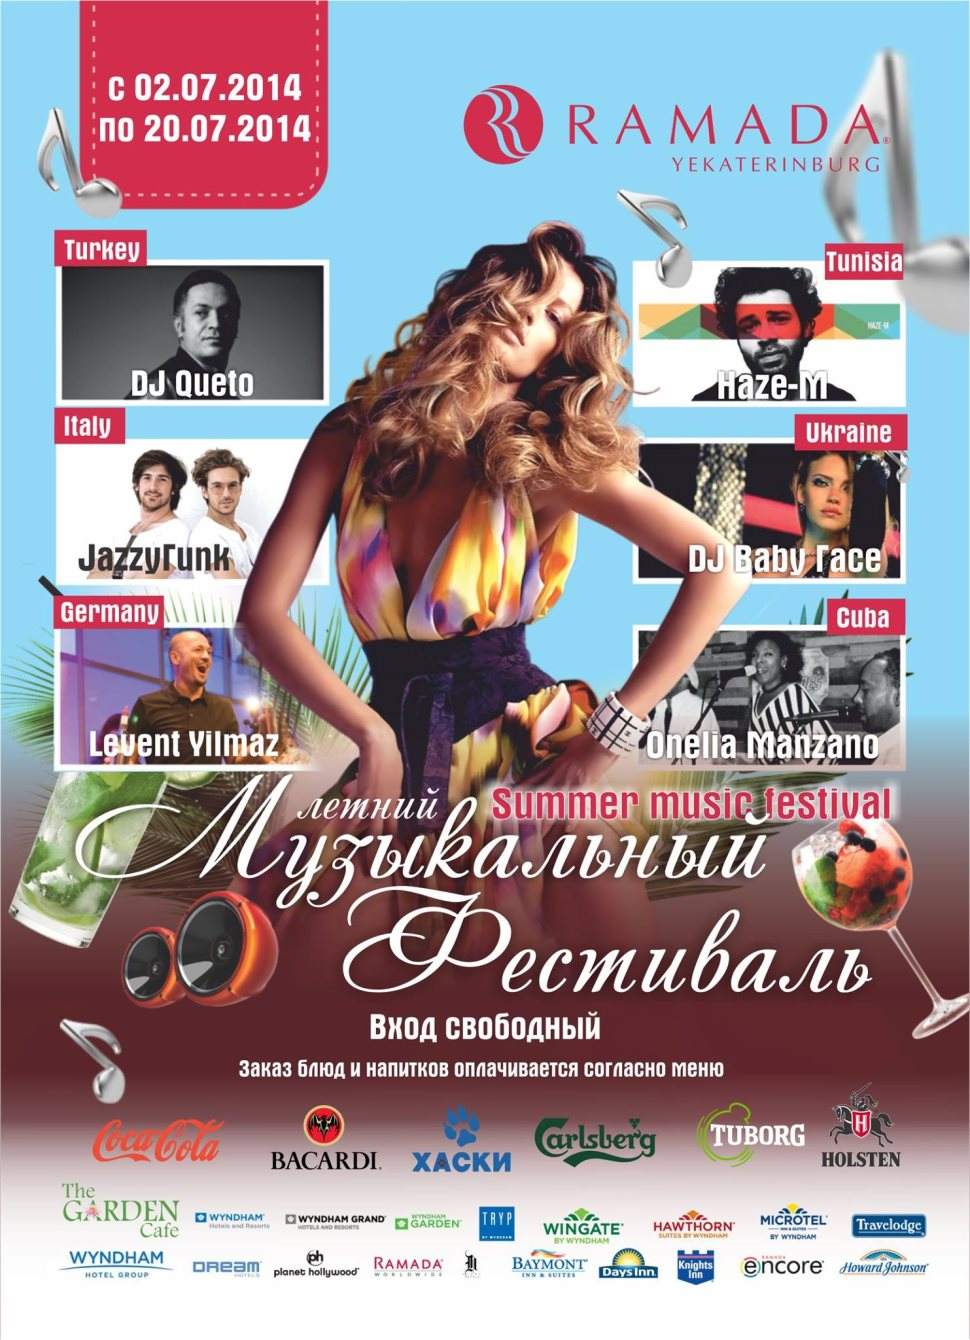 Ramada Ekaterinburg Open Air Music Festival 2014 - フライヤー裏